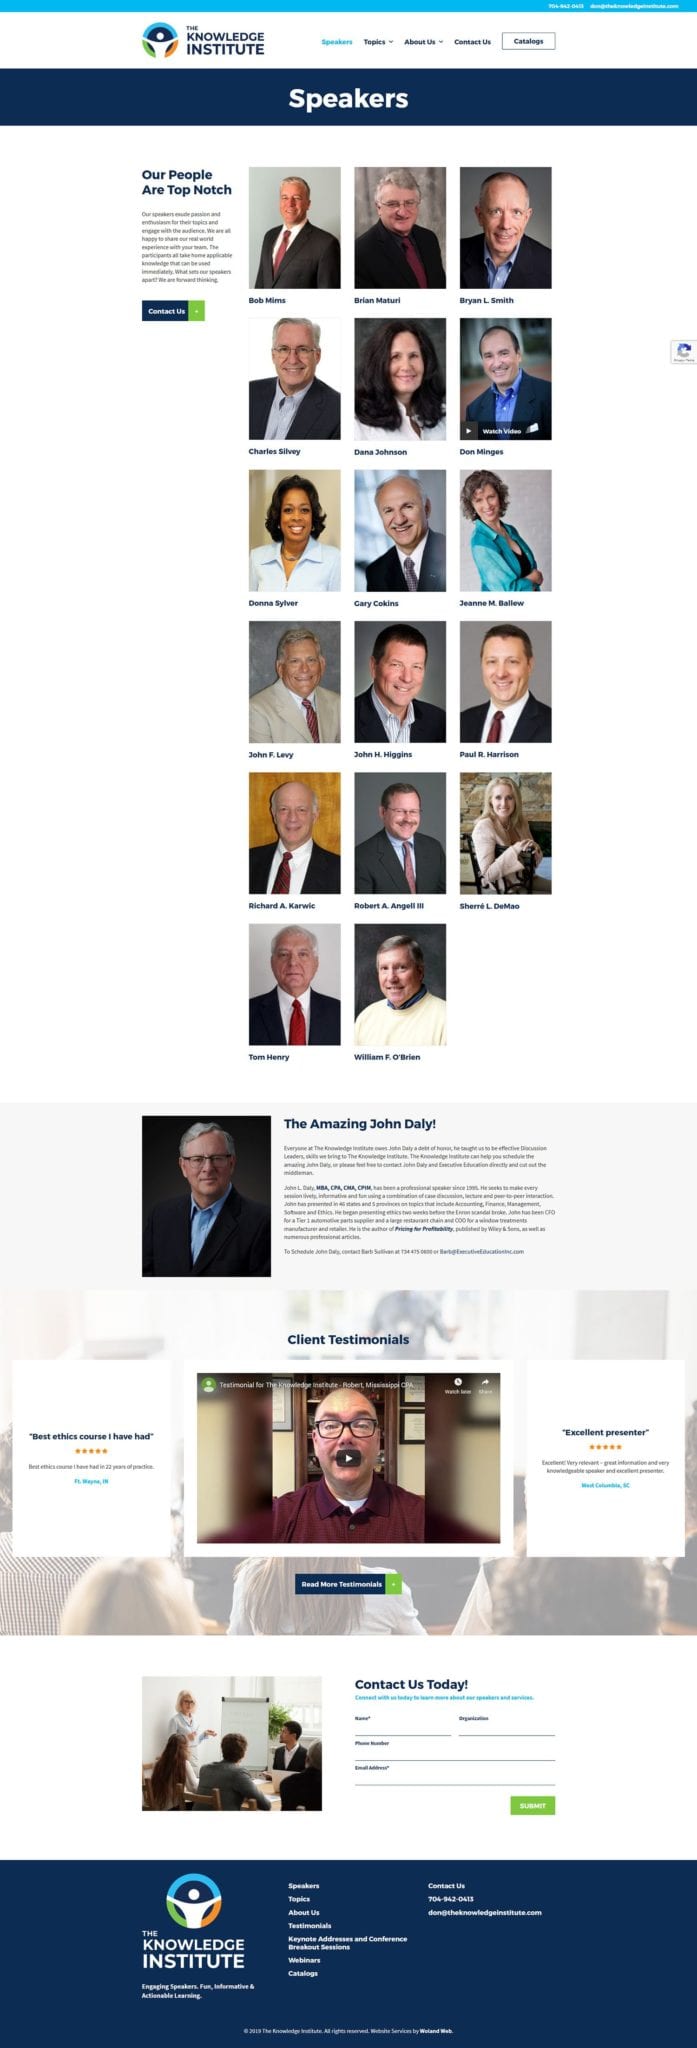 The Knowledge Institute website speakers page screenshot